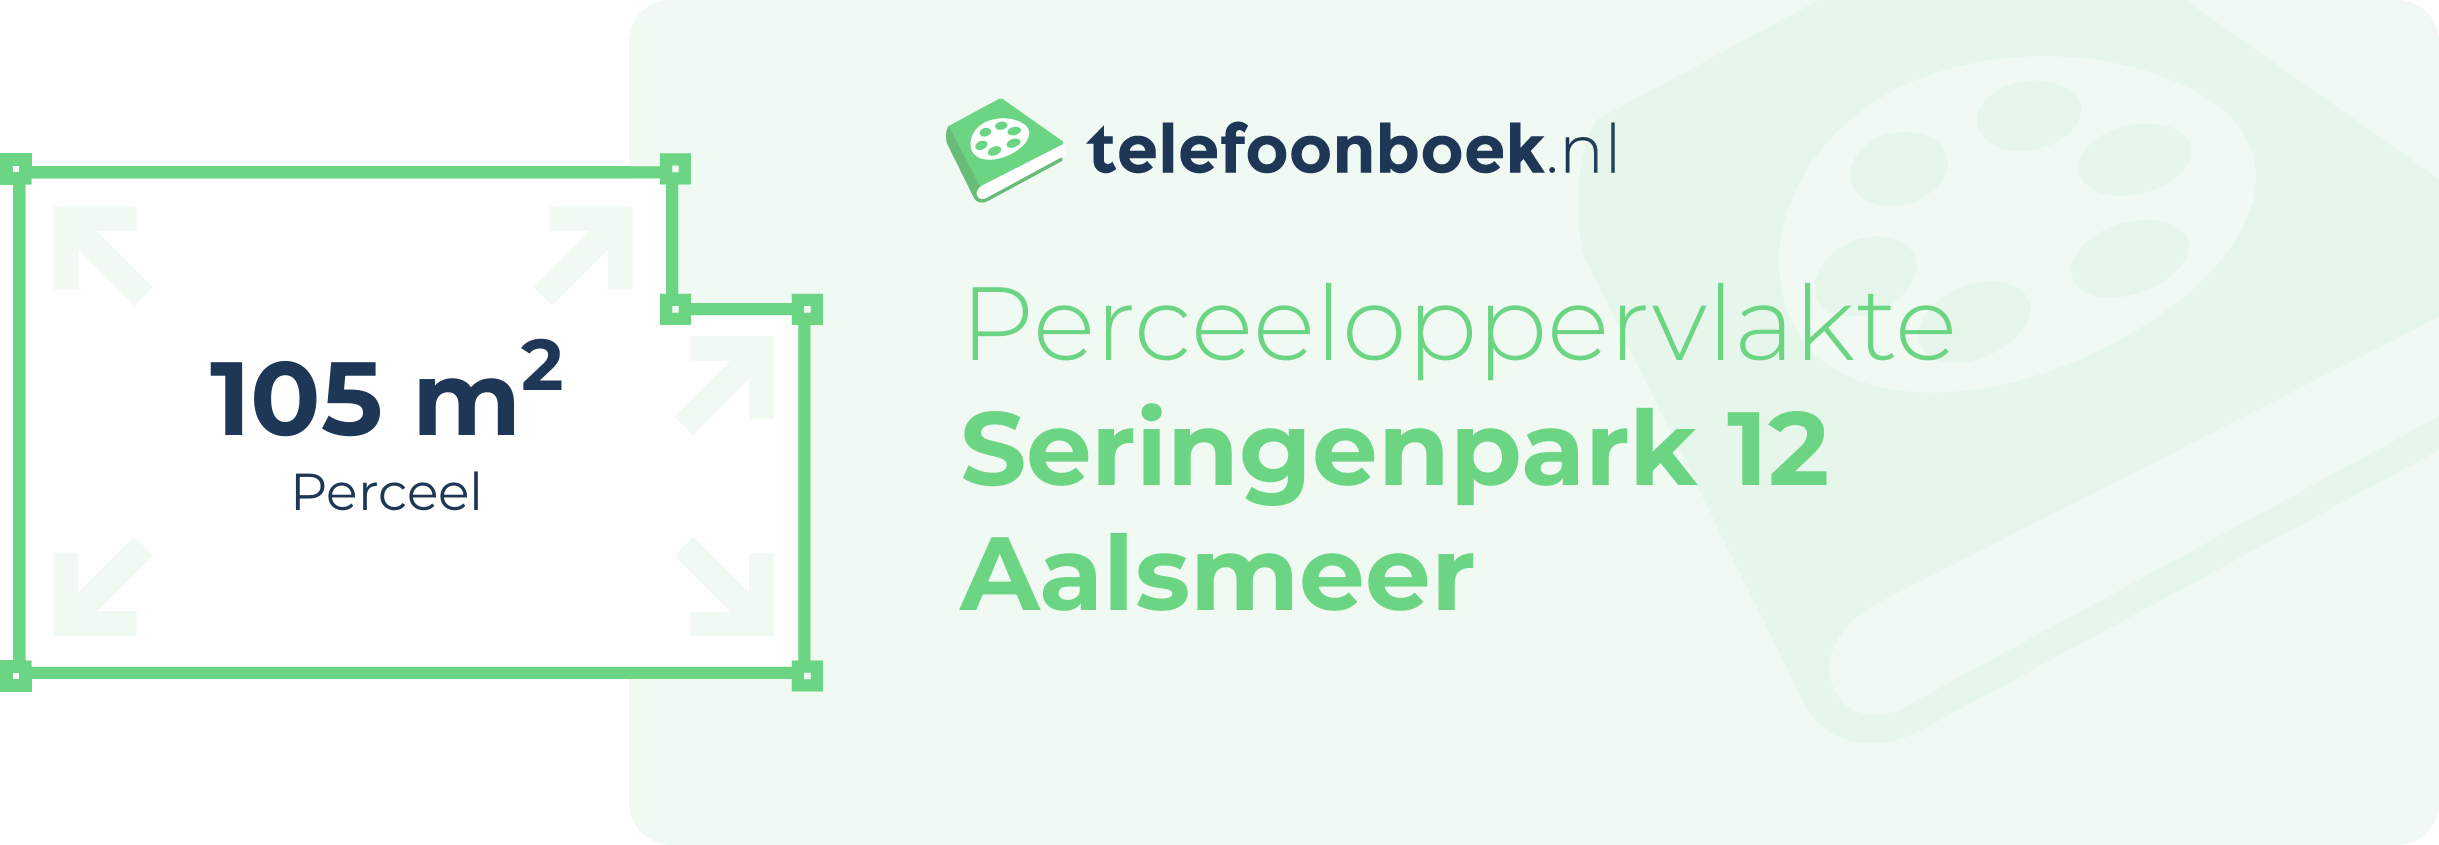 Perceeloppervlakte Seringenpark 12 Aalsmeer